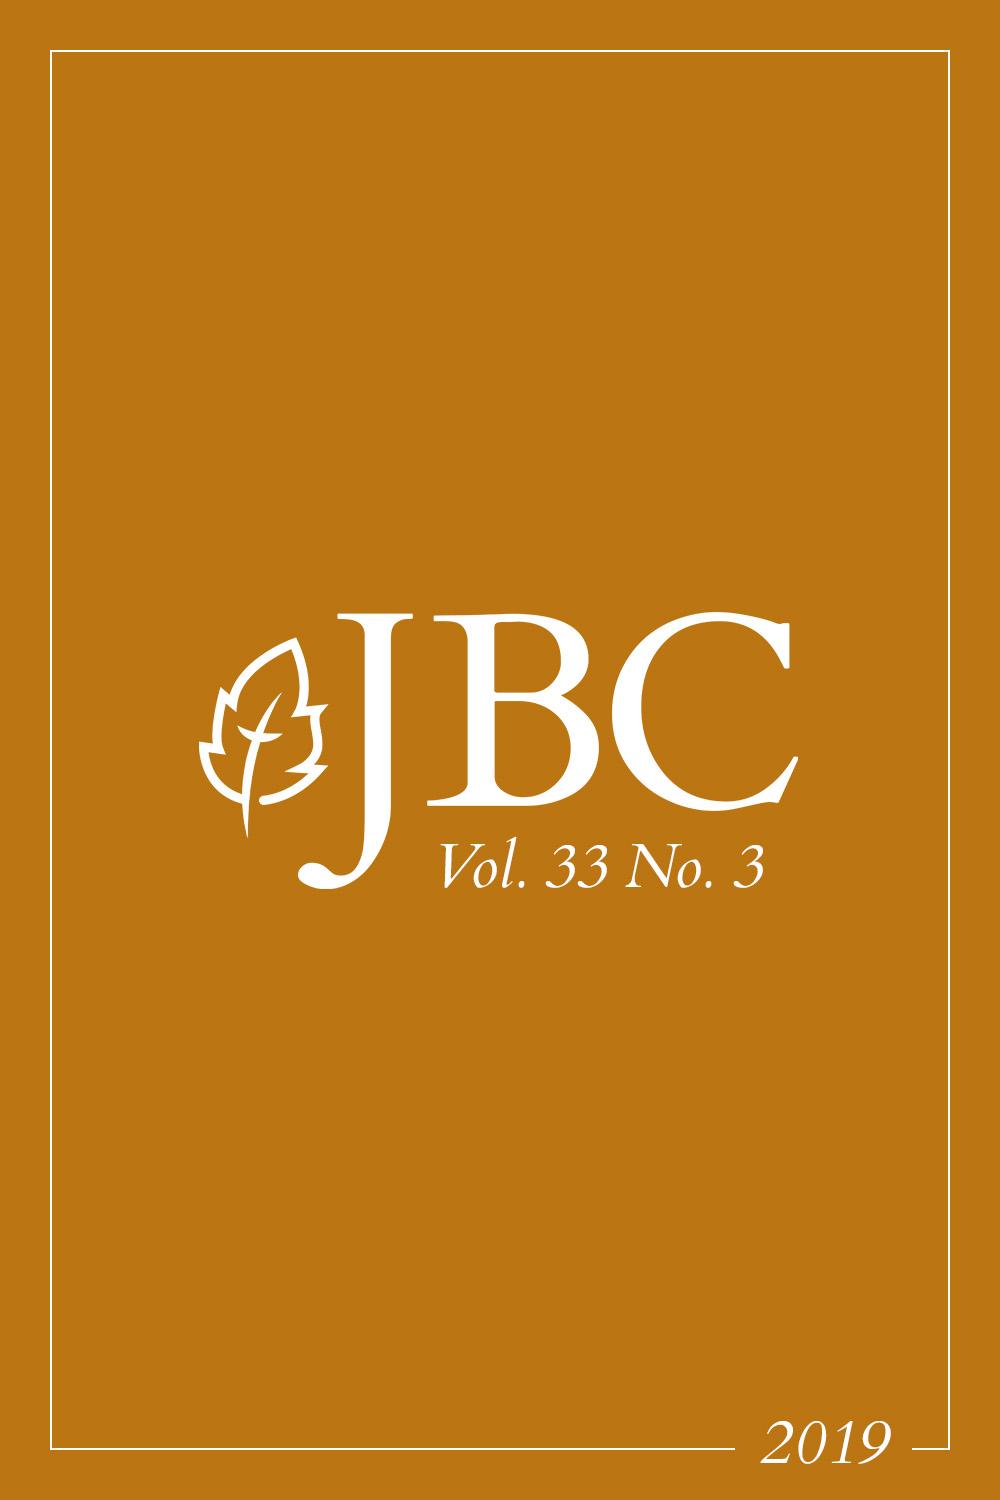 JBC Volume 33:3 (2019) PDF Featured Image